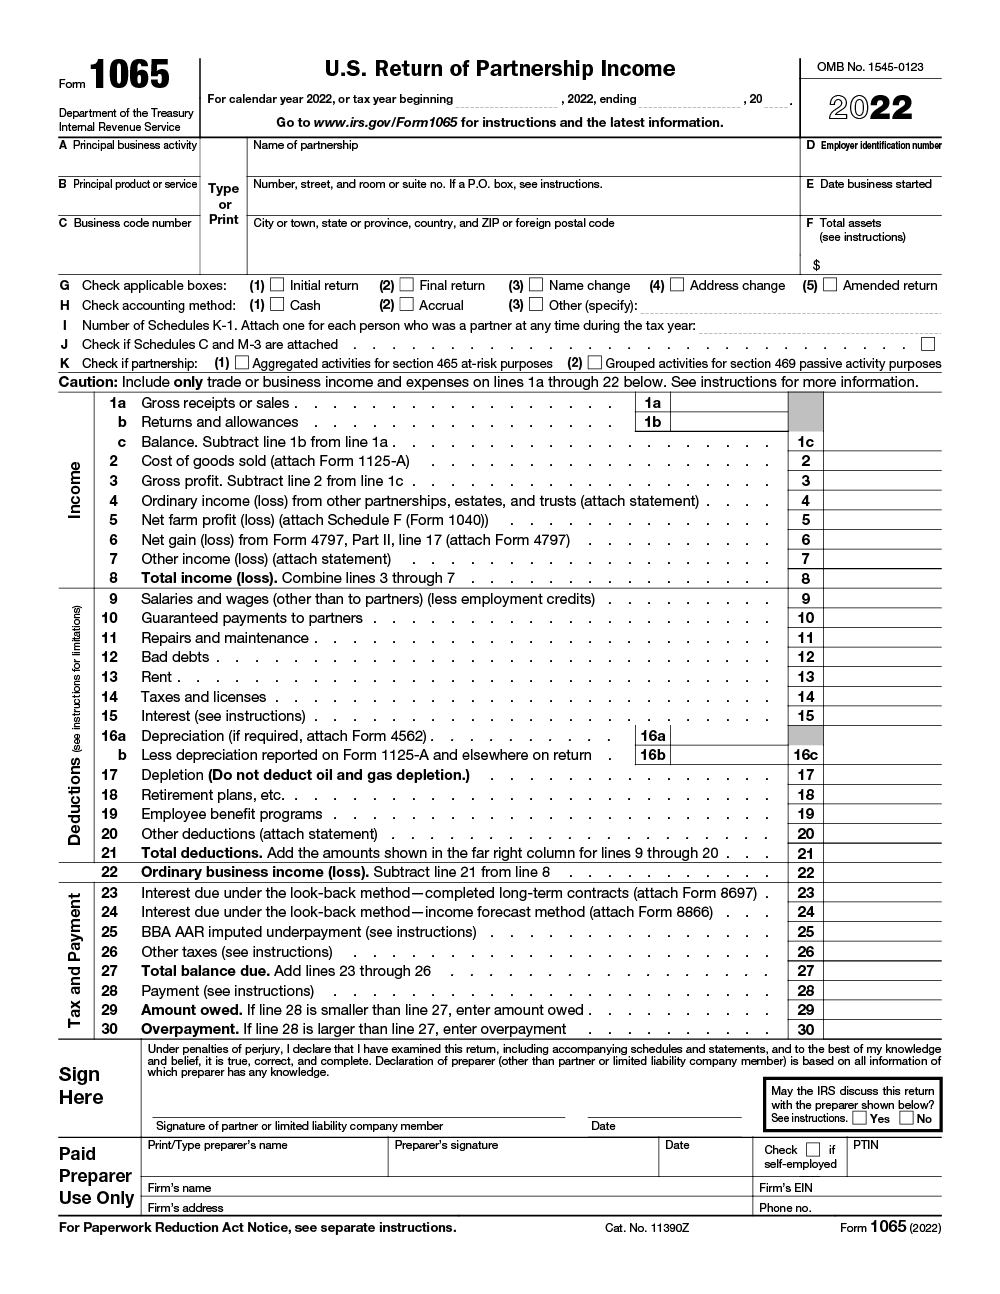 Form 1065 Instructions U.S. Return of Partnership